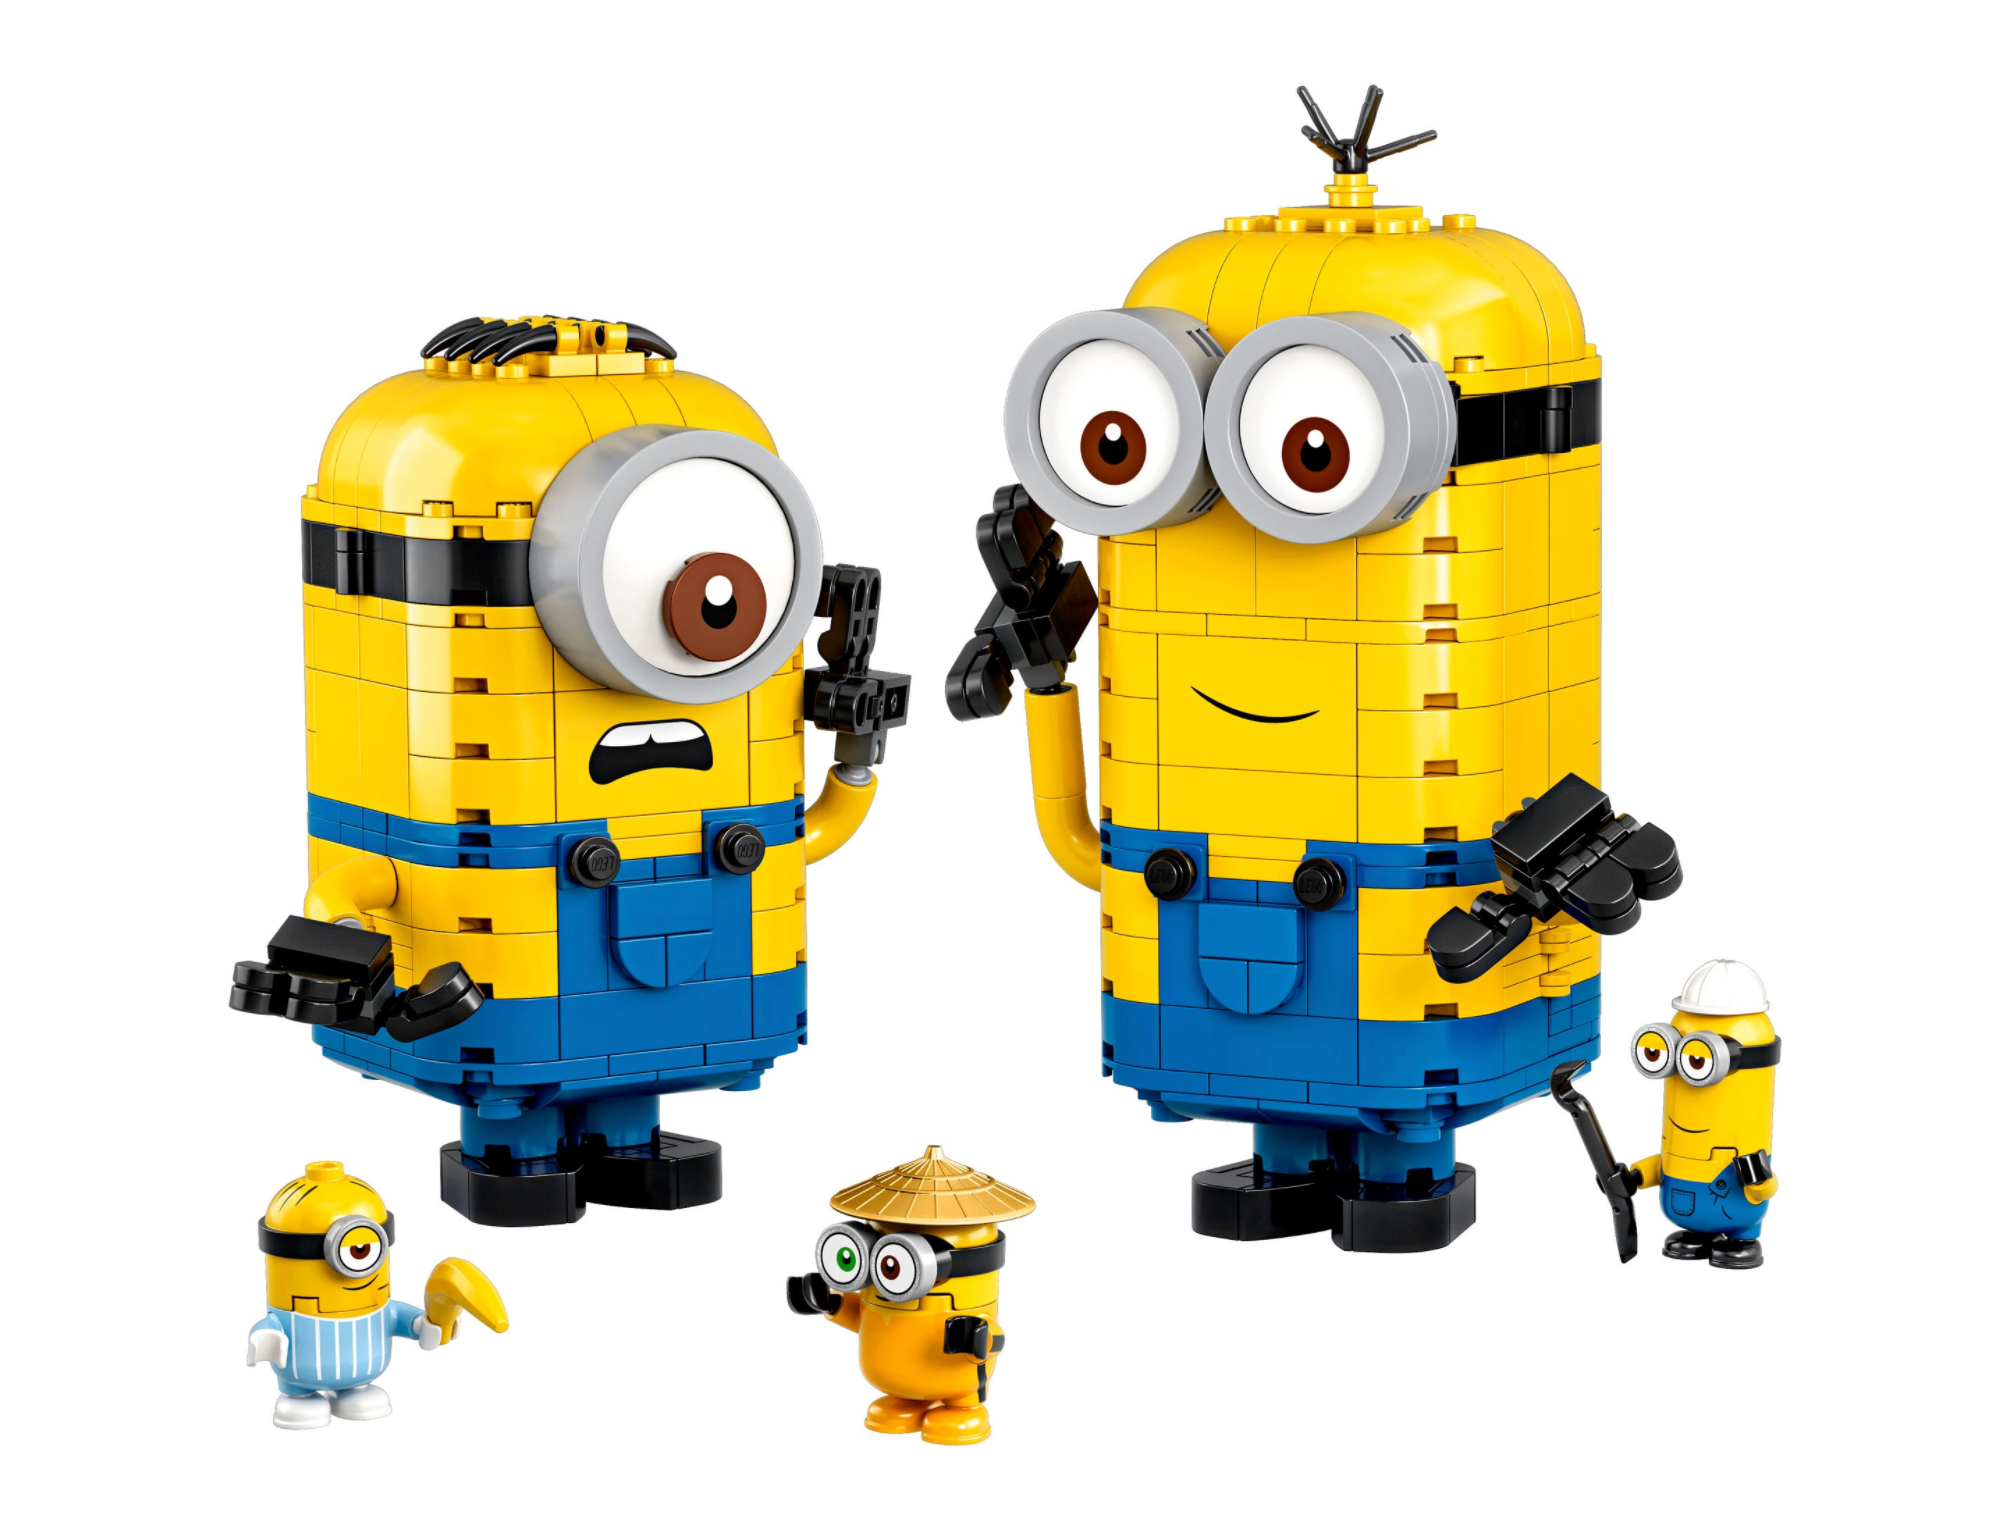 LEGO: Minions - Brick-Built Minions and Their Lab